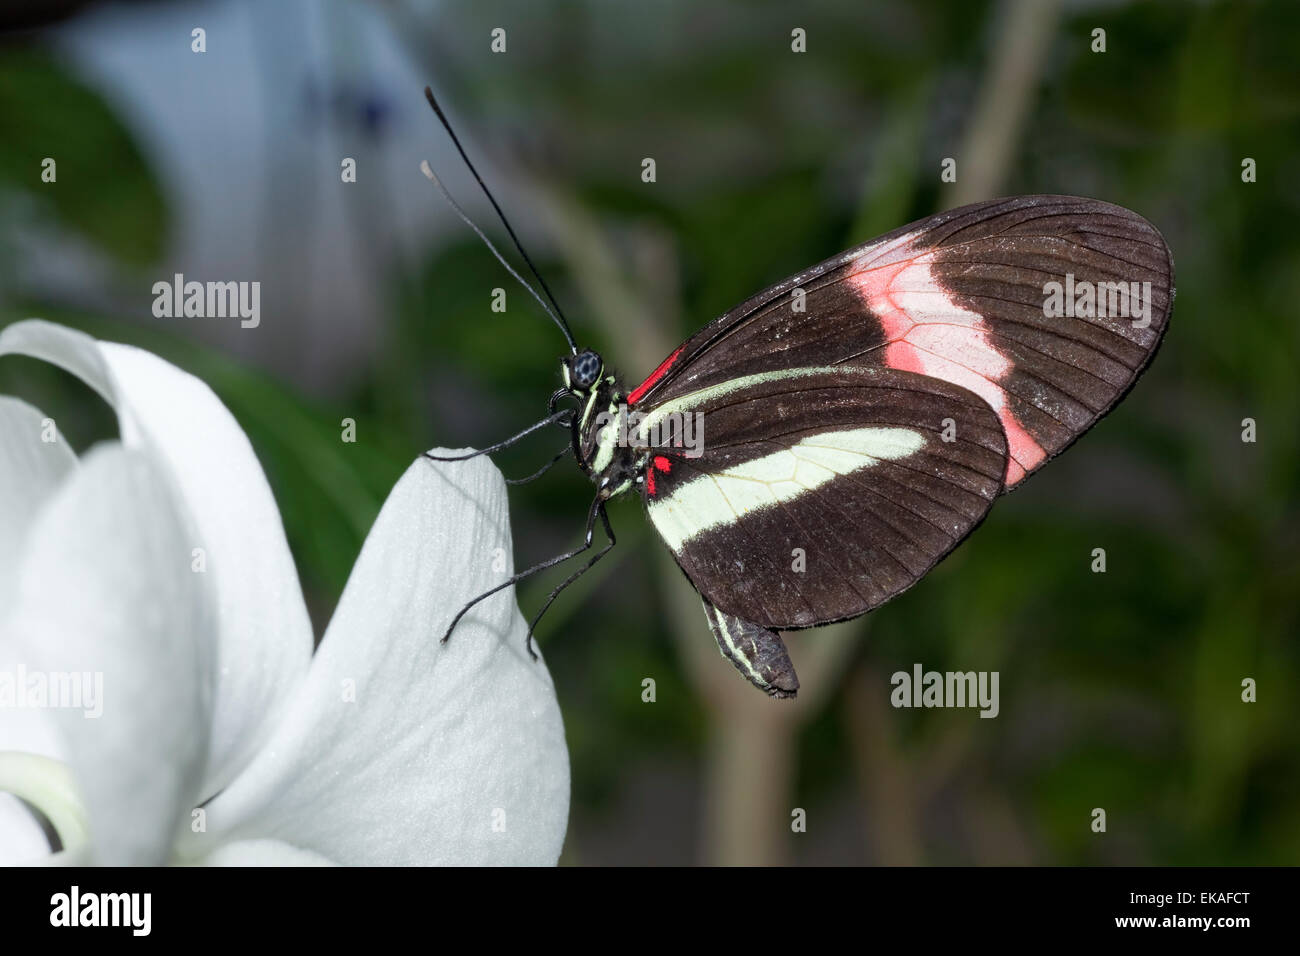 Postman Butterfly, Common Postman - Heliconius melpomene rosina - Central America Stock Photo